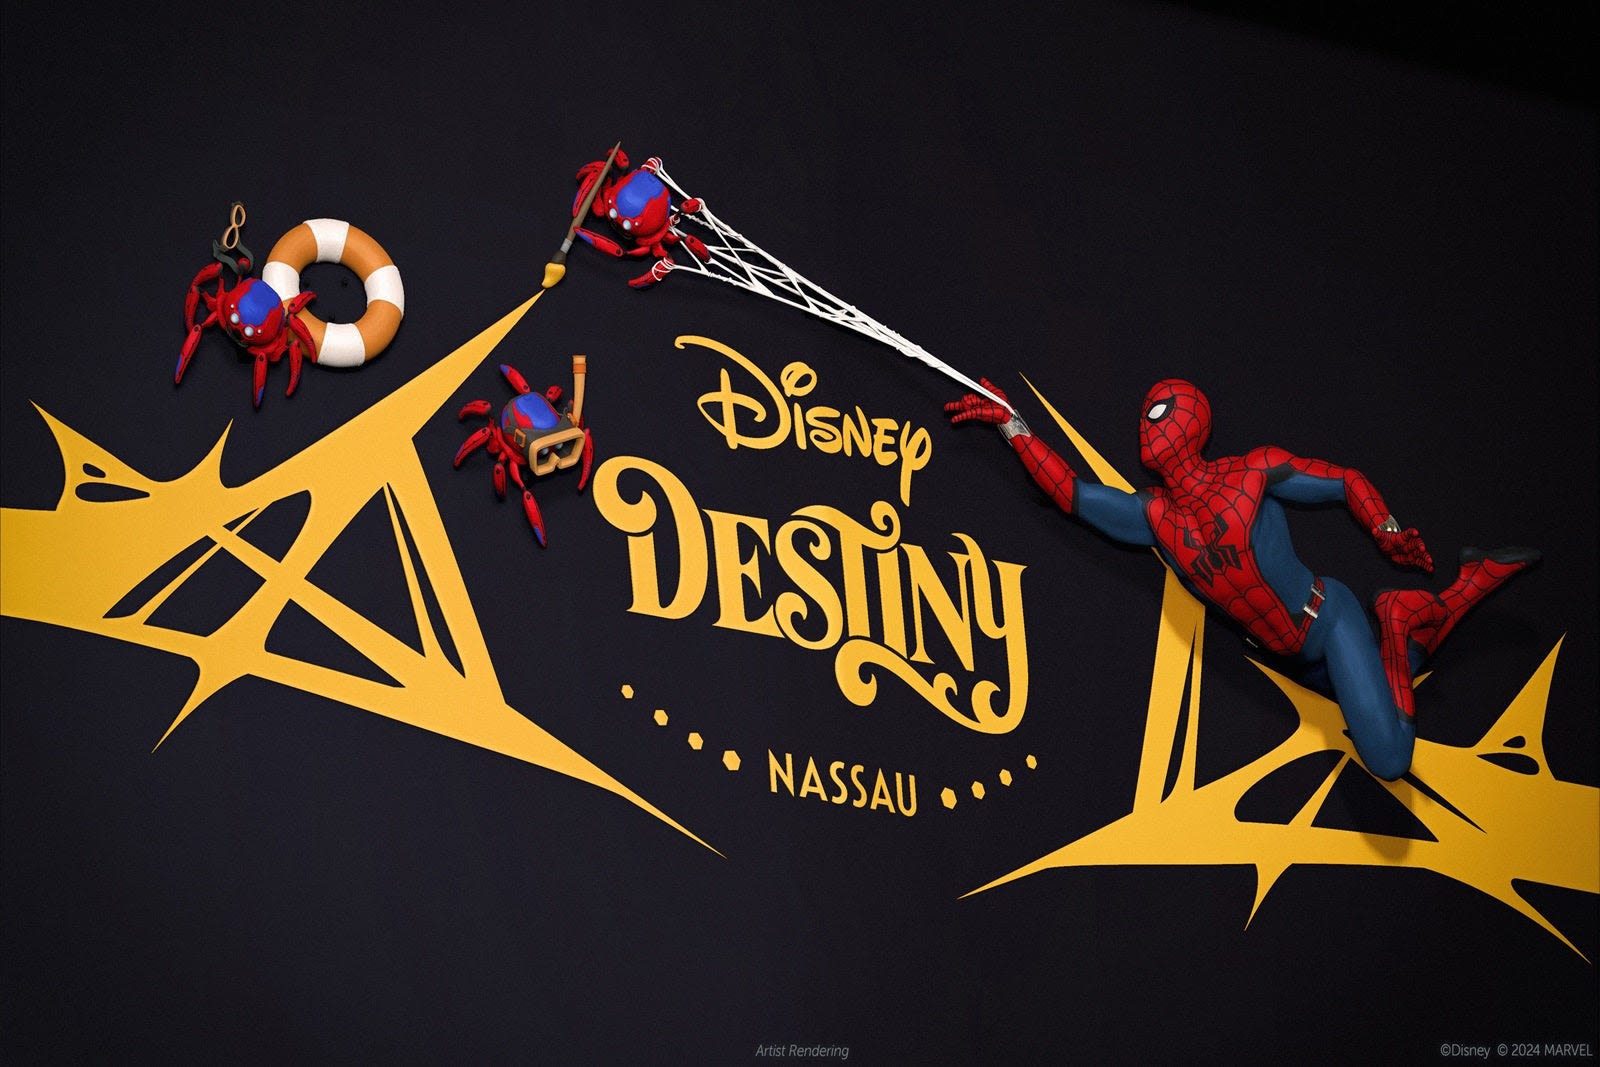 Disney Cruise Line reveals Marvel theming for Disney Destiny - The Points Guy